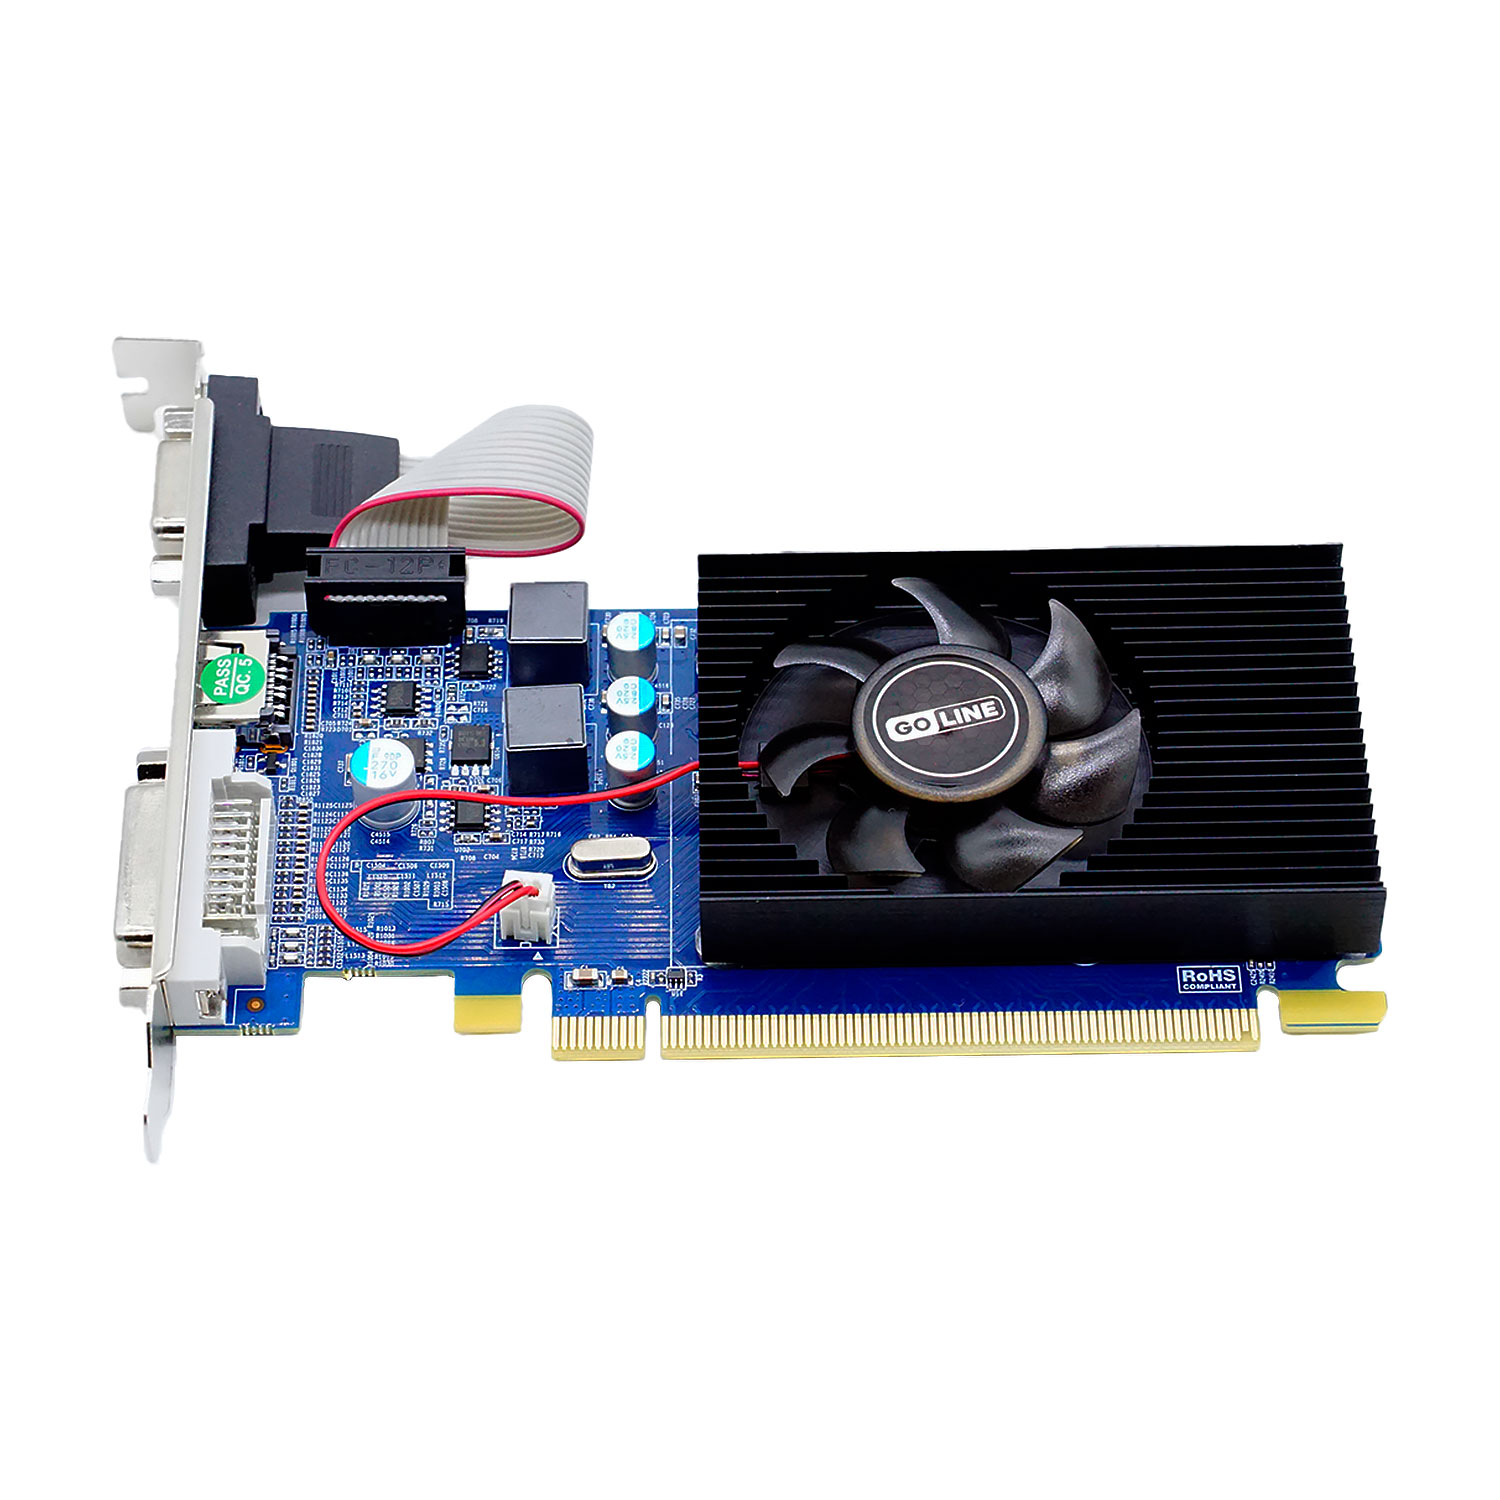 Placa de Vídeo Goline R5-230 AMD Radeon R5 230 1GB DDR3 - GL-R5-230-1GB-D3 (1 Ano de Garantia)